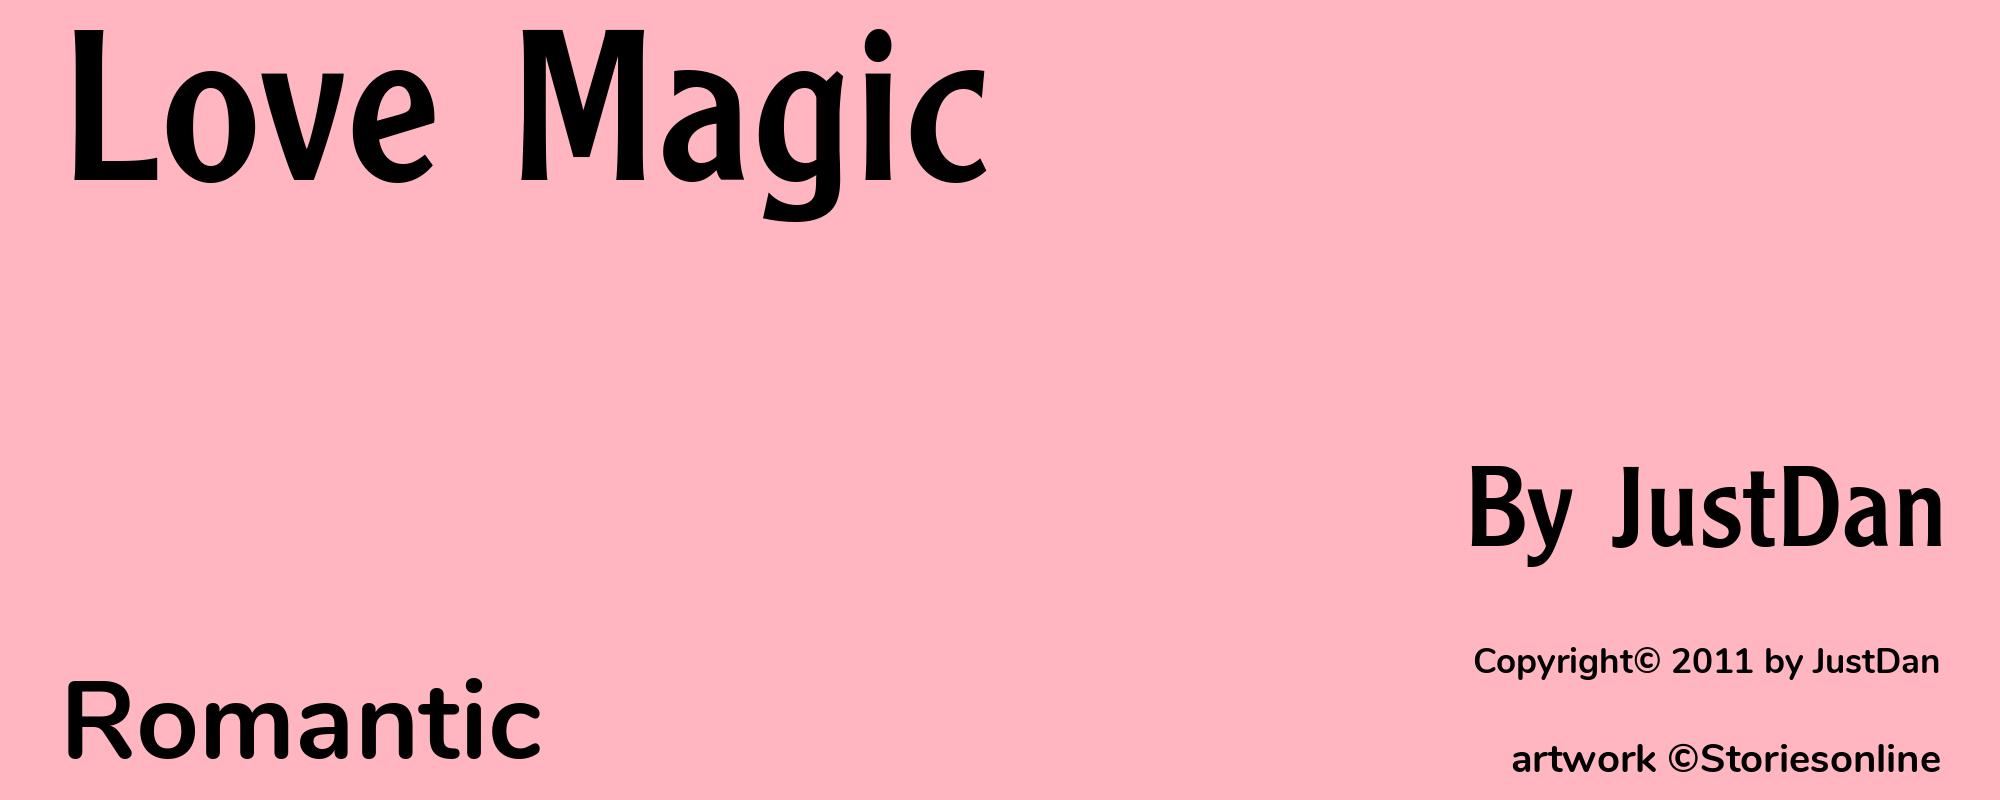 Love Magic - Cover